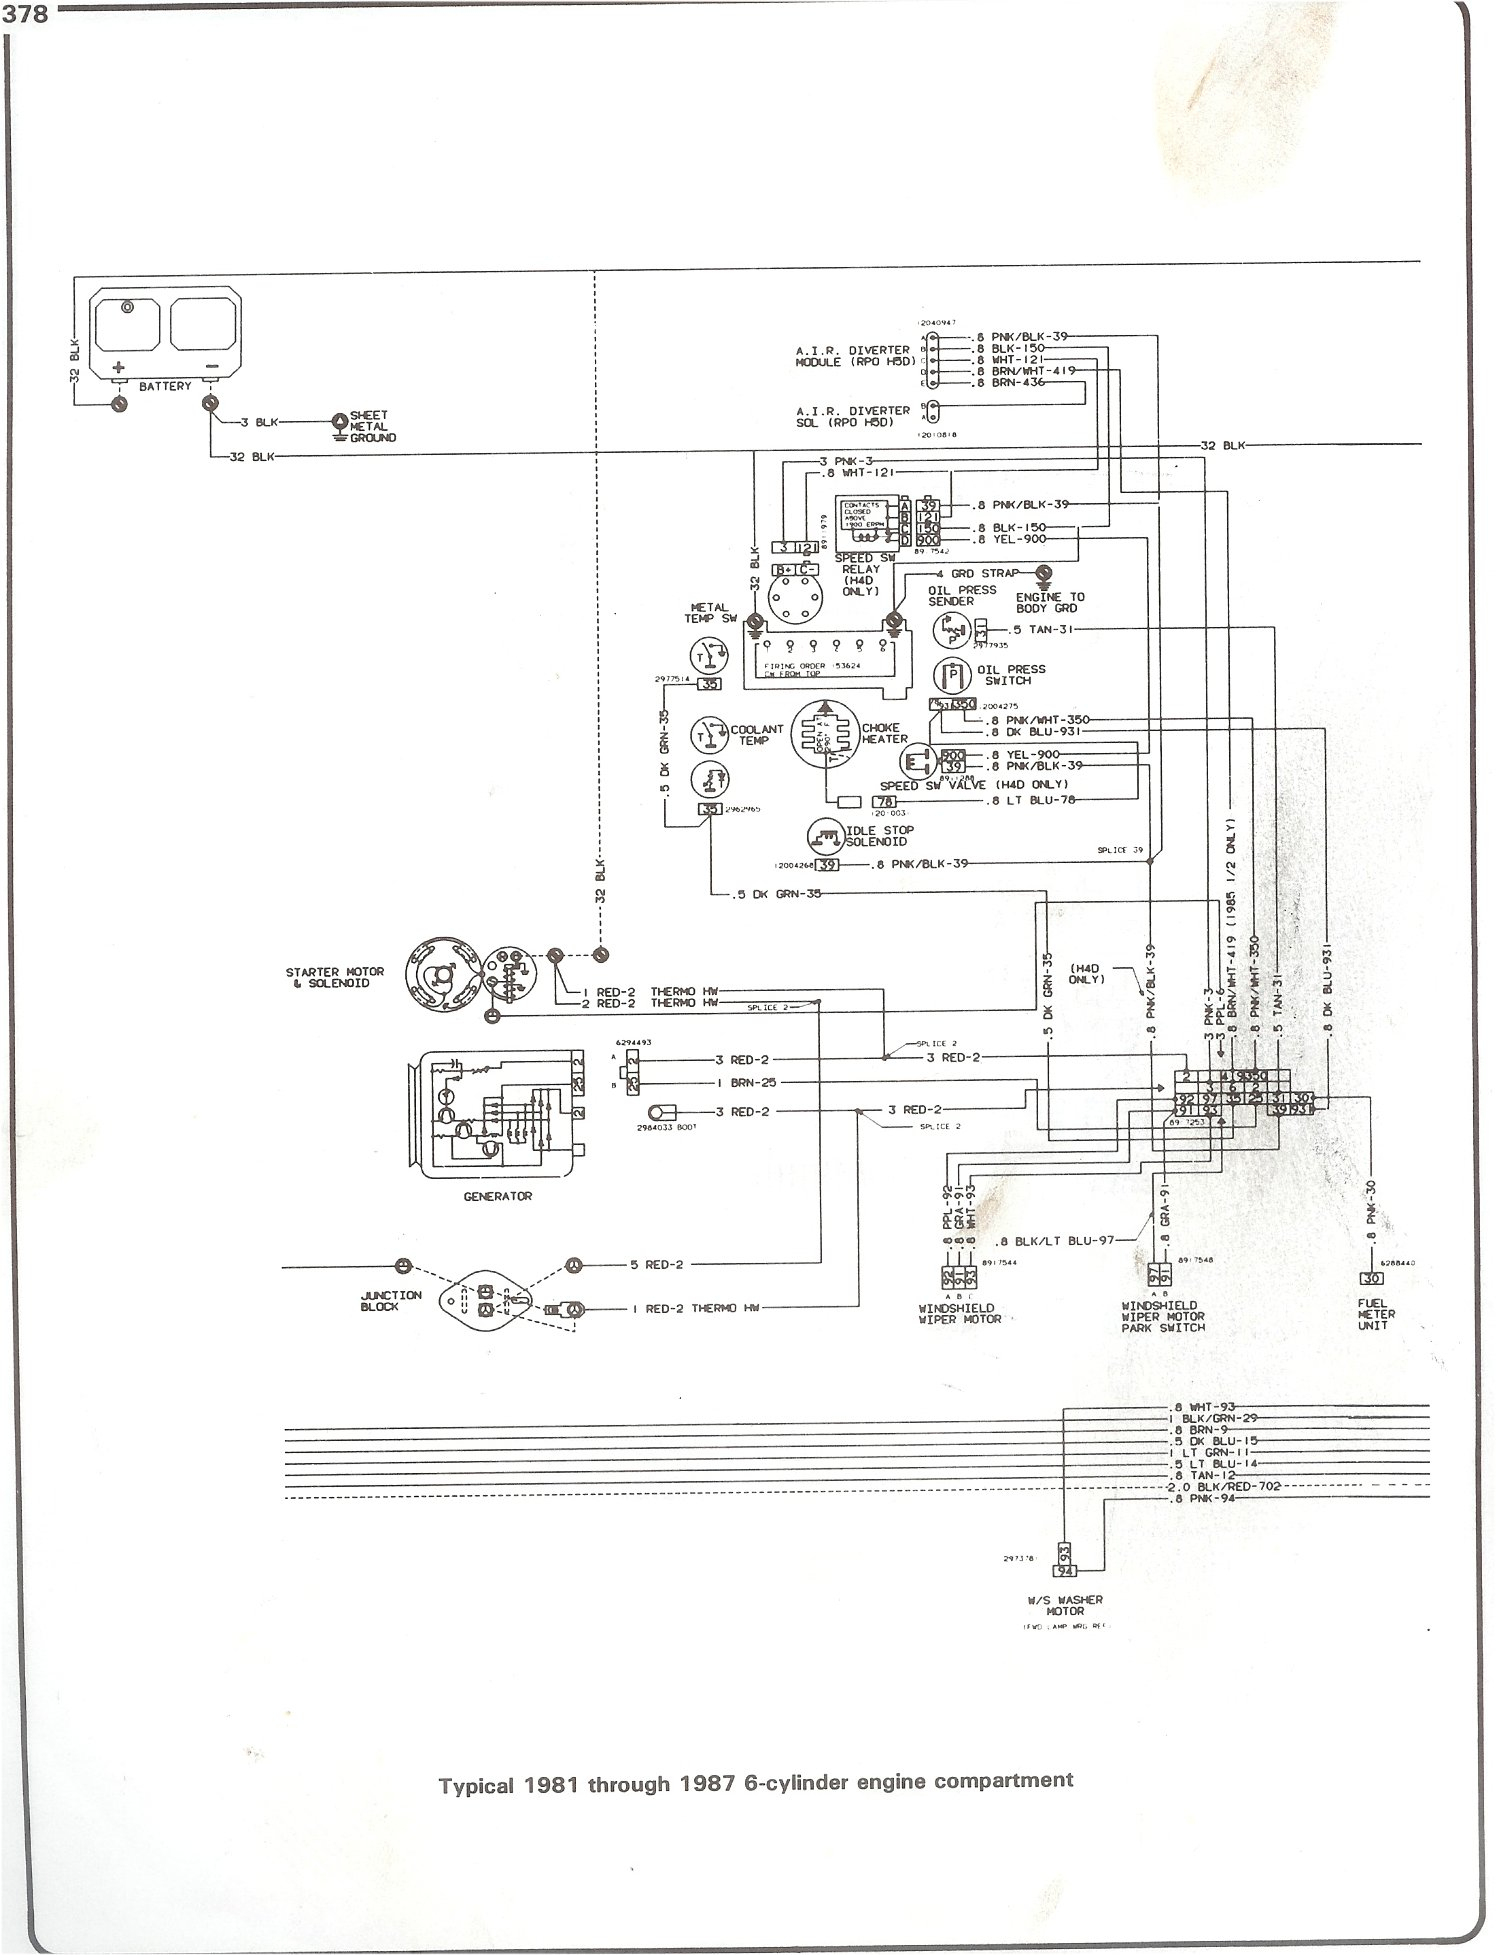 1987 Silverado Wiring Diagram - Data Wiring Diagram Today - 87 Chevy Truck Wiring Diagram